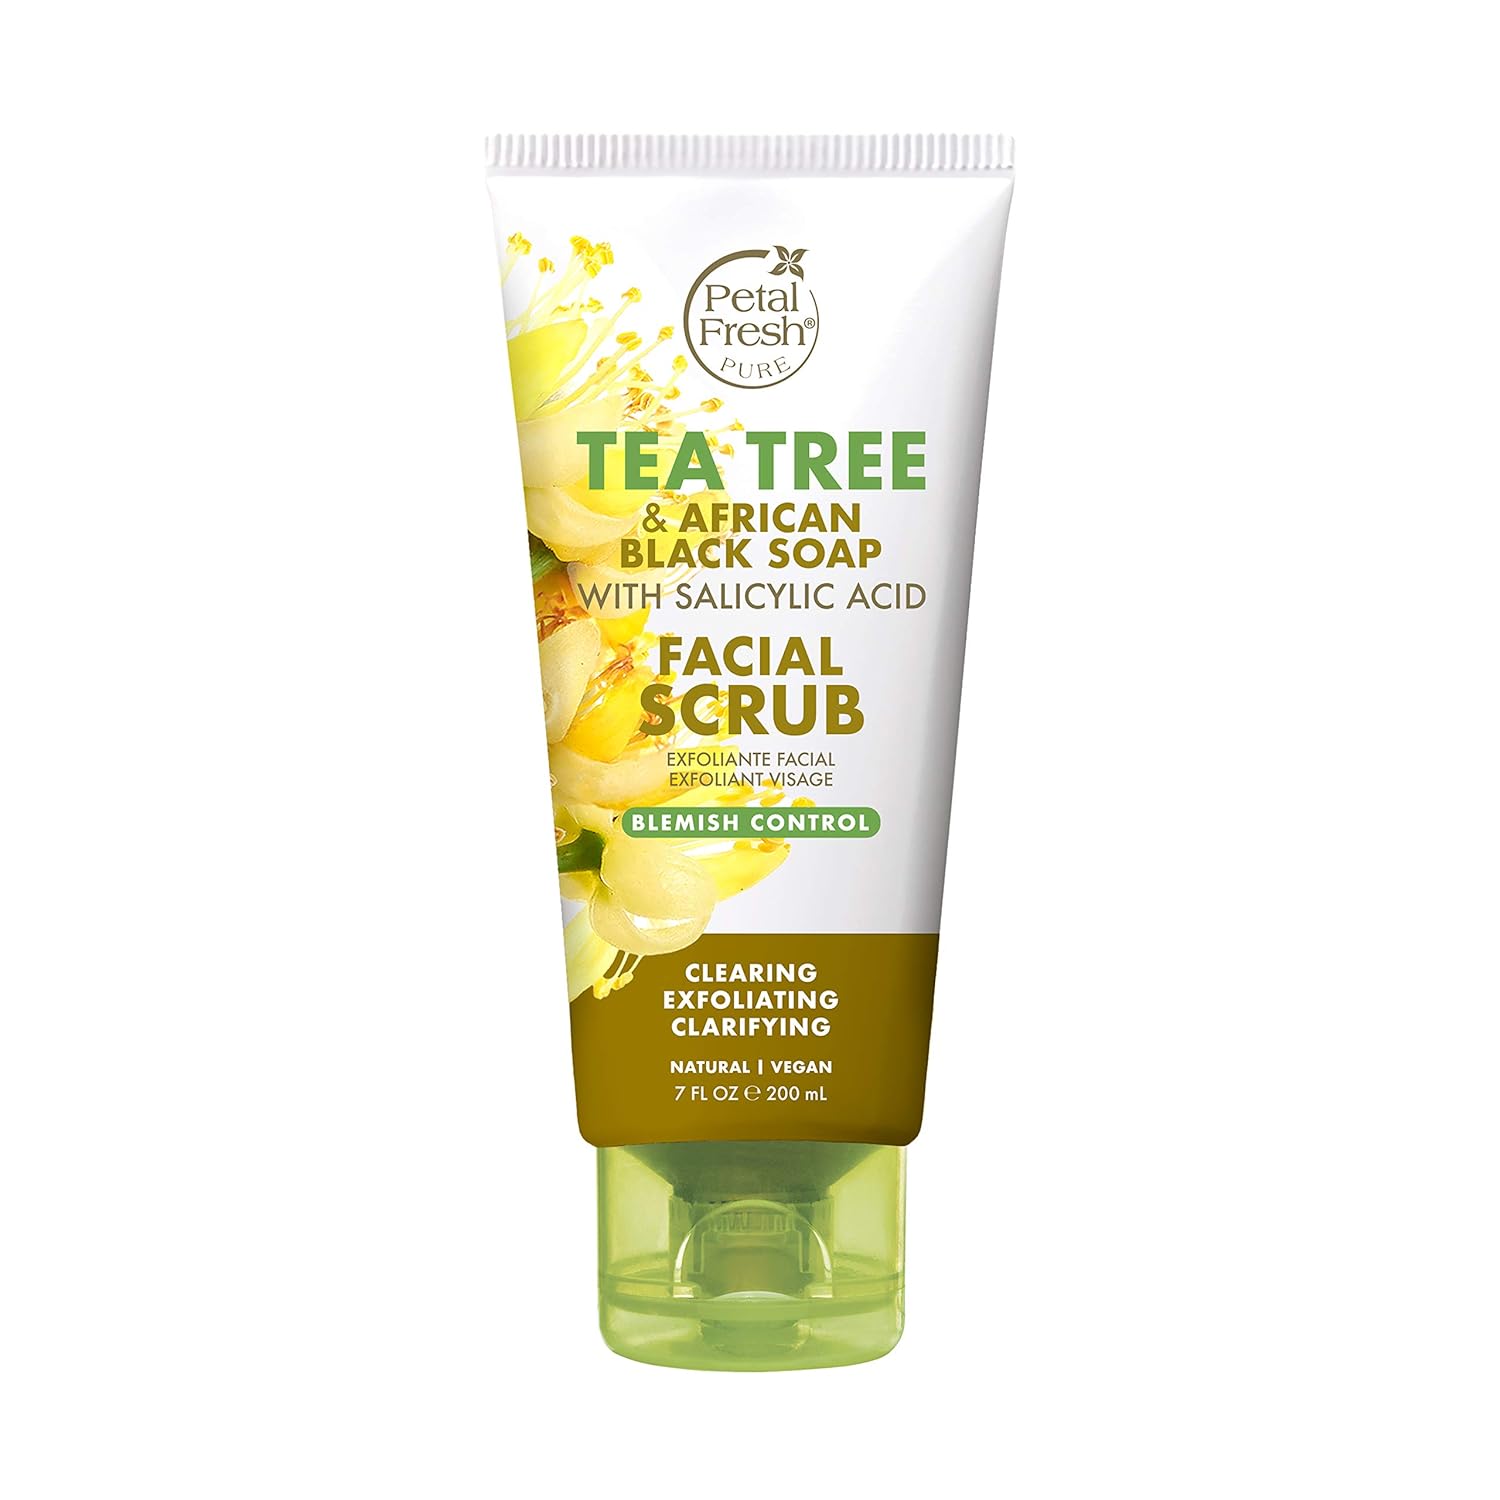 Petal Fresh Tea Tree & African Black Soap Facial Scrub, Pure Blemish Control, Clean Skincare, Natural Face Scrub, Daily Skincare, Vegan and Cruelty Free, 7 oz